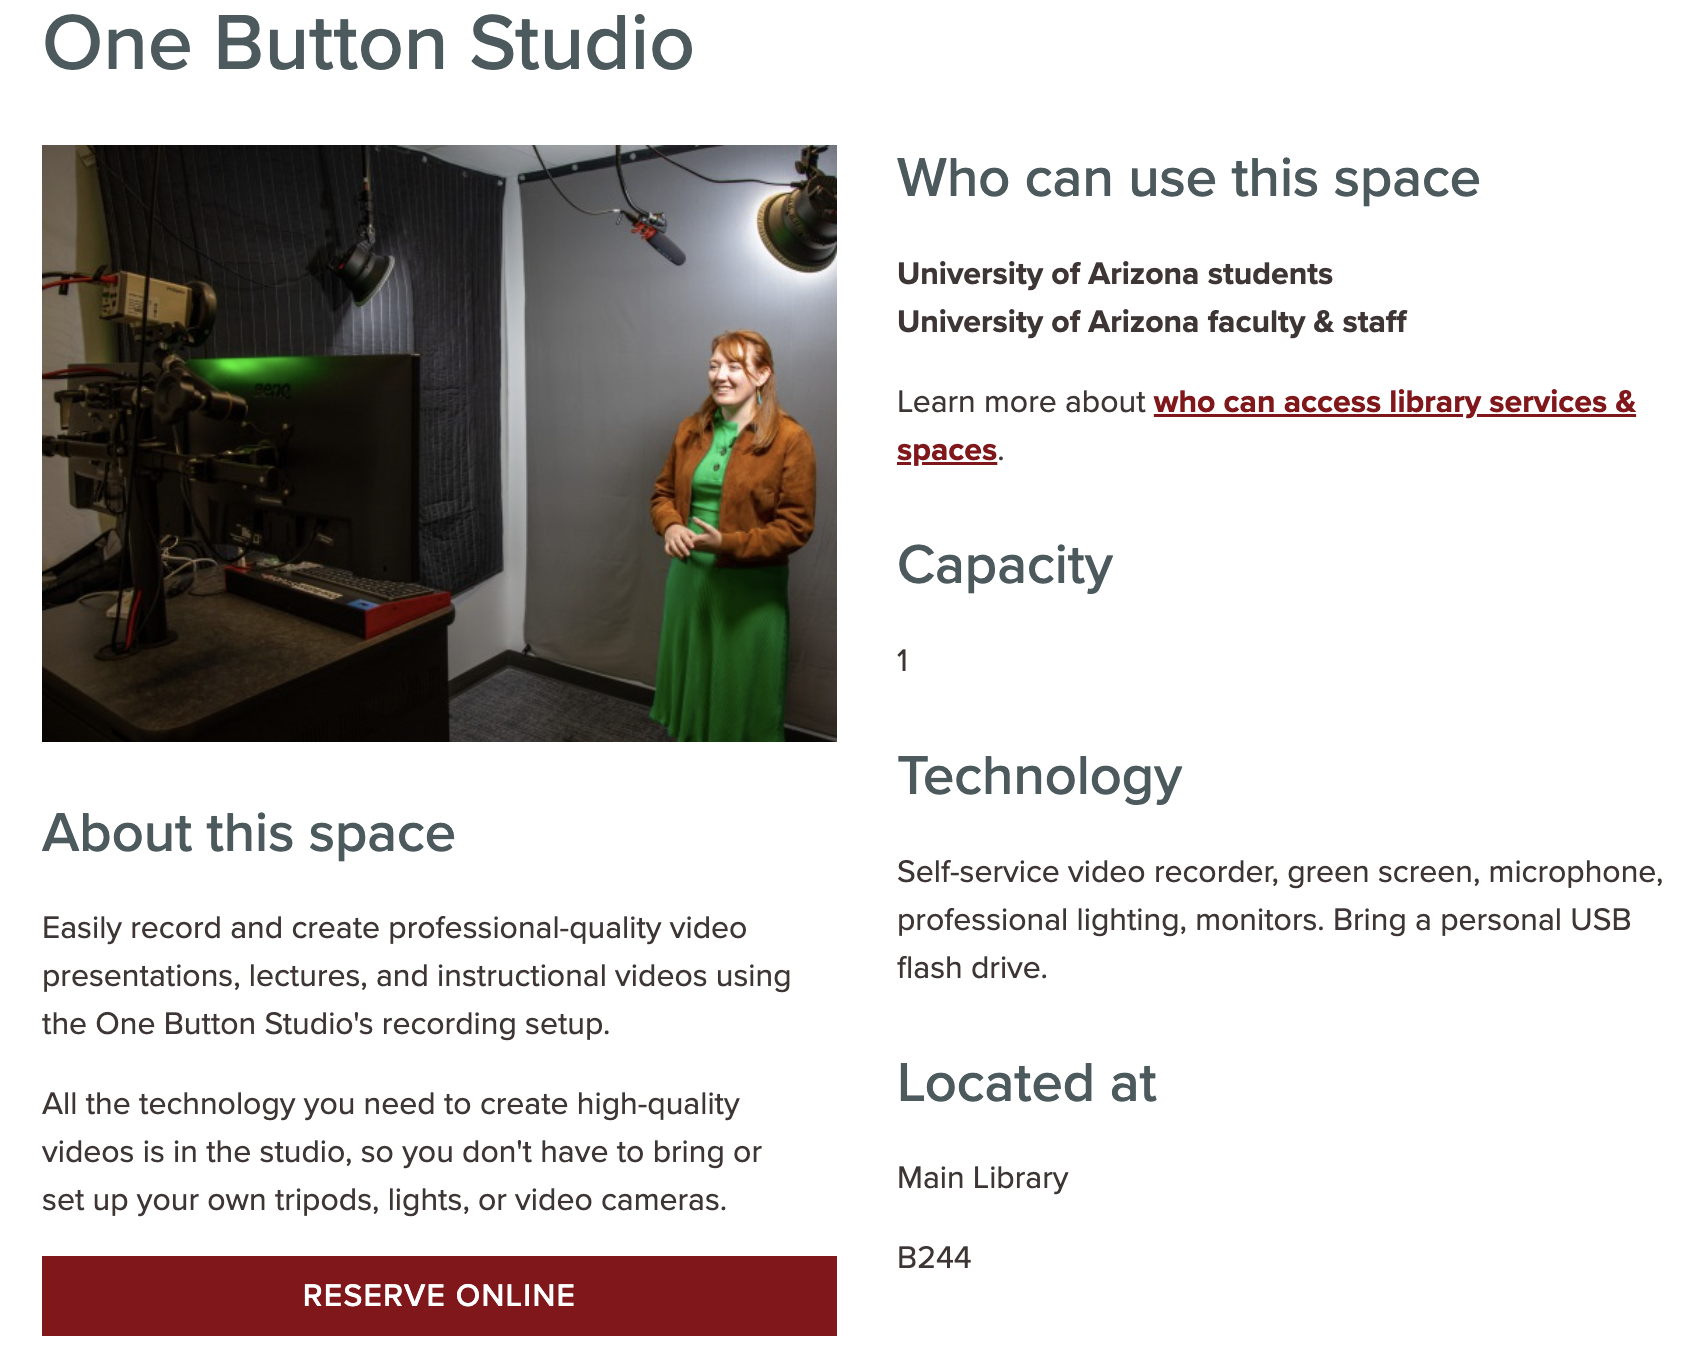 A screenshot of the One Button Studio website